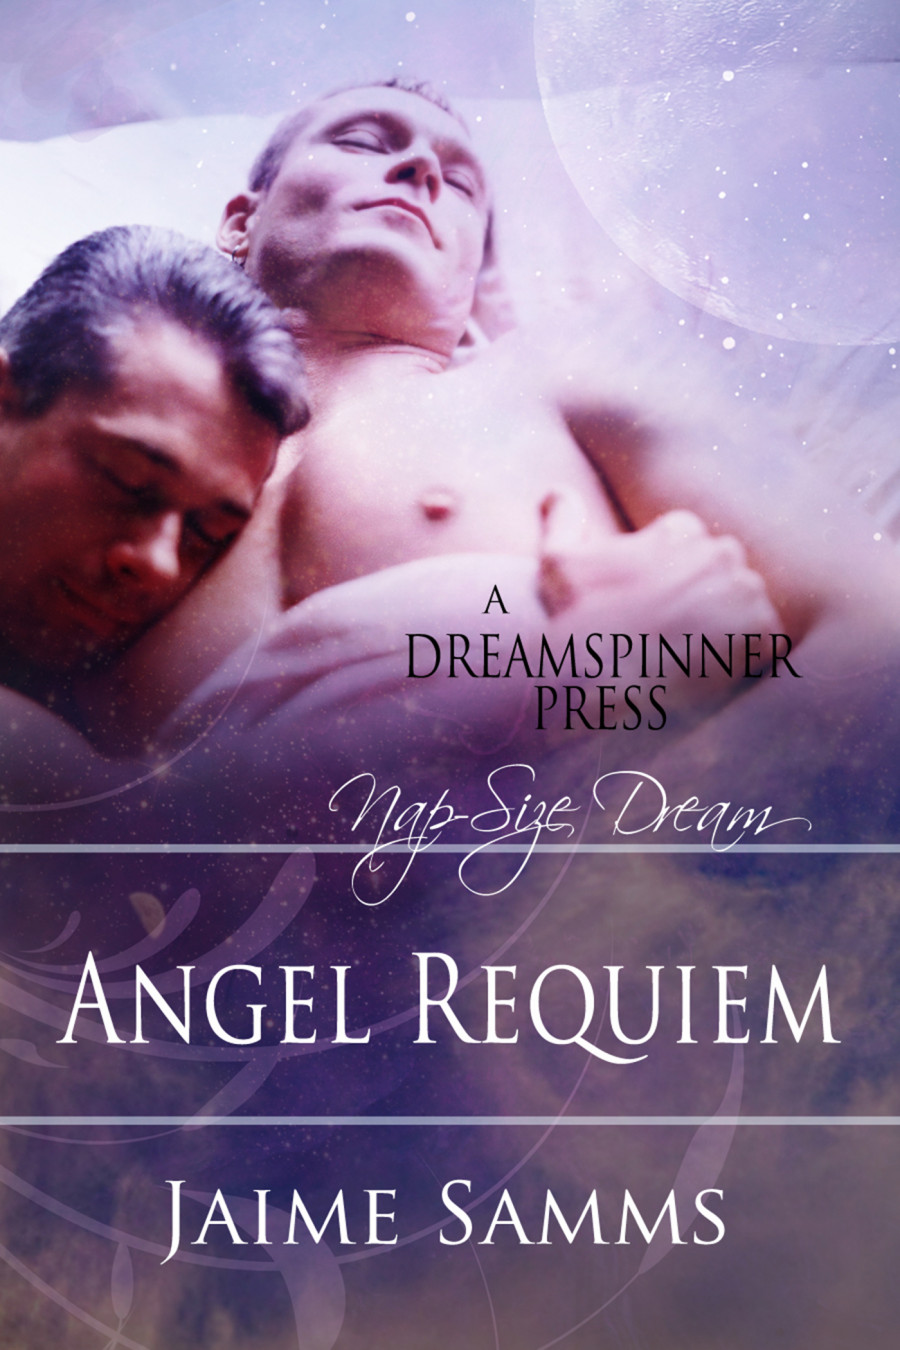 Angel Requiem